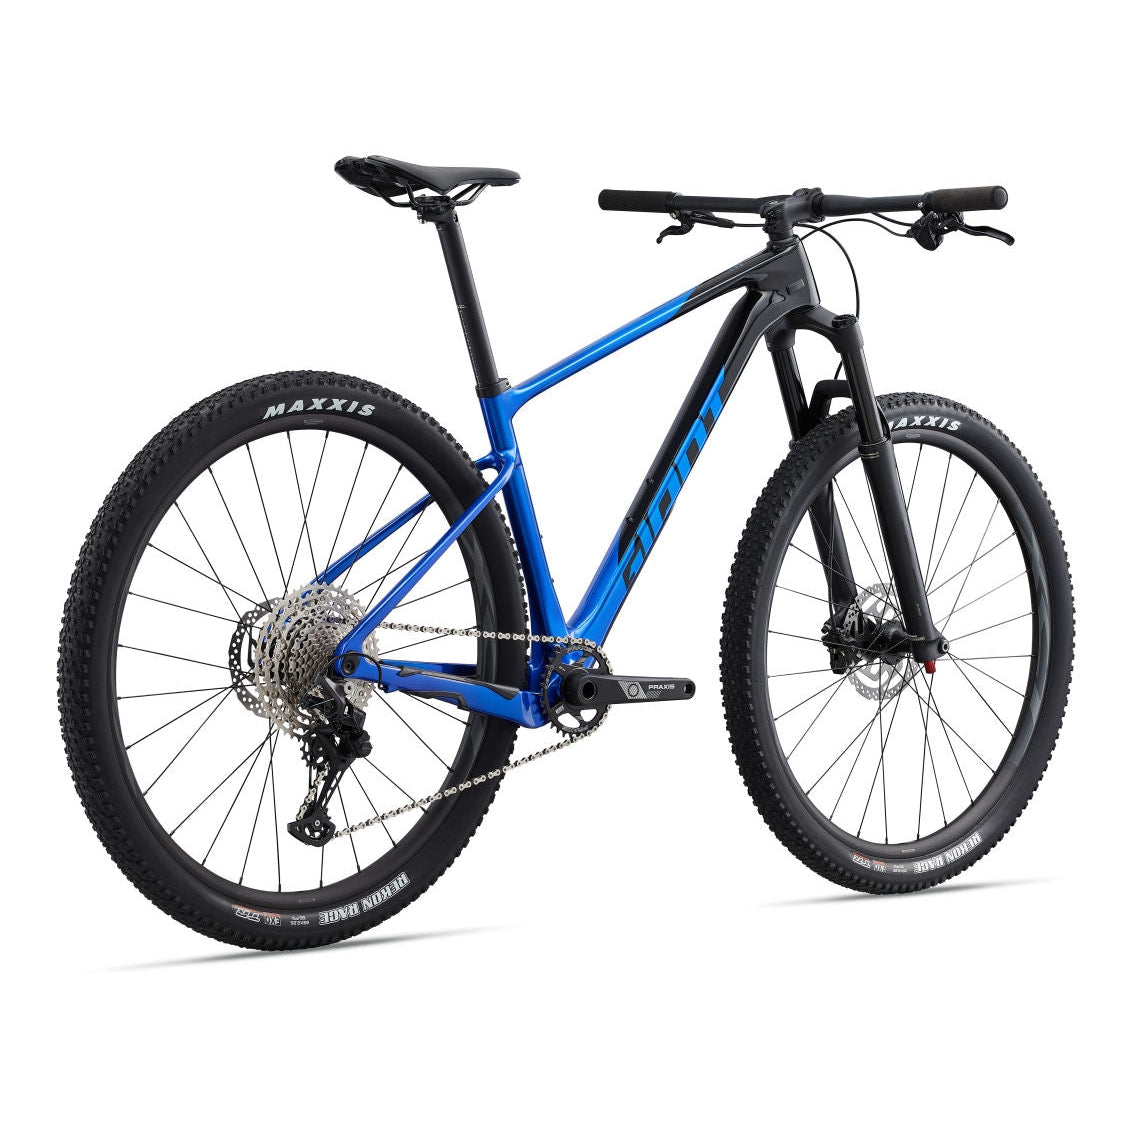 Giant XtC Advanced 29 3 Mountain Bike - Bikes - Bicycle Warehouse